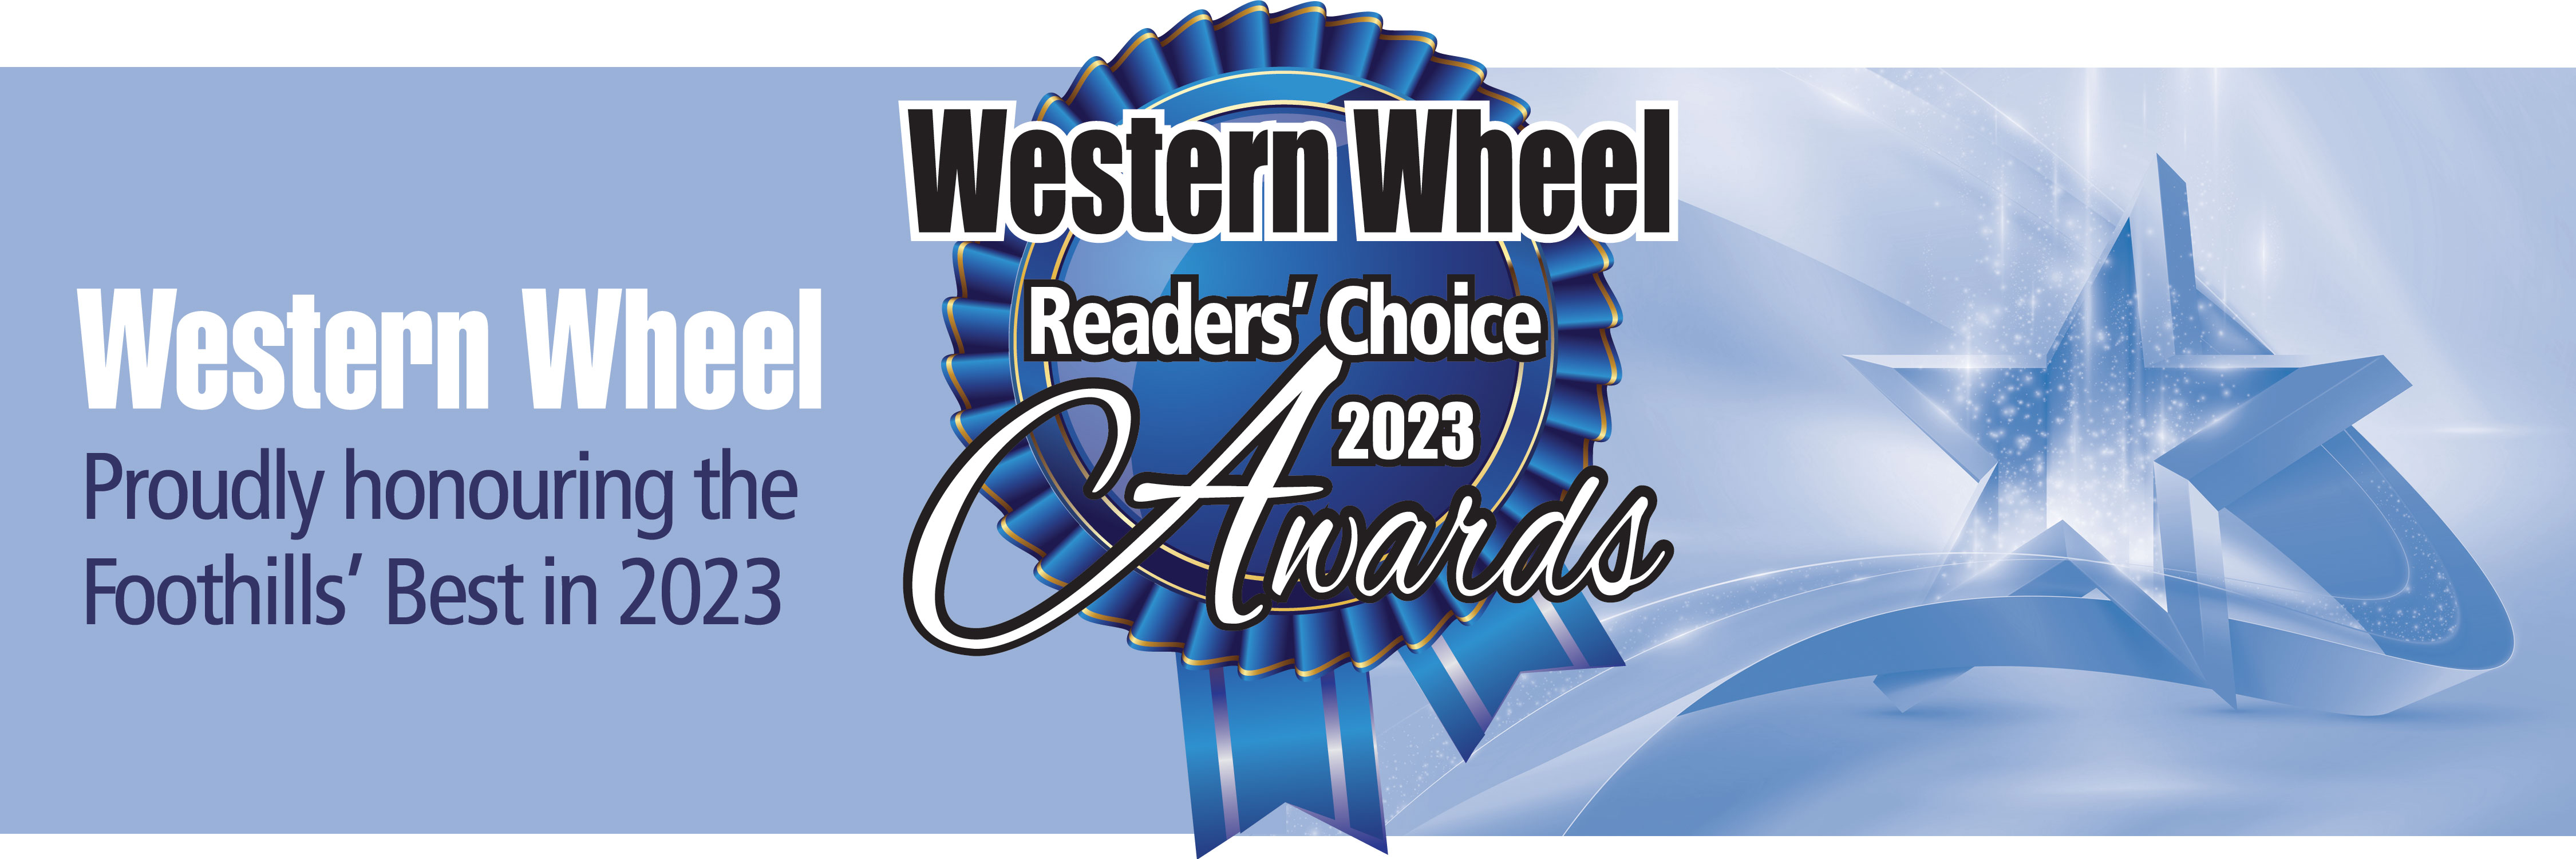 2023 Western Wheel Readers' Choice Awards